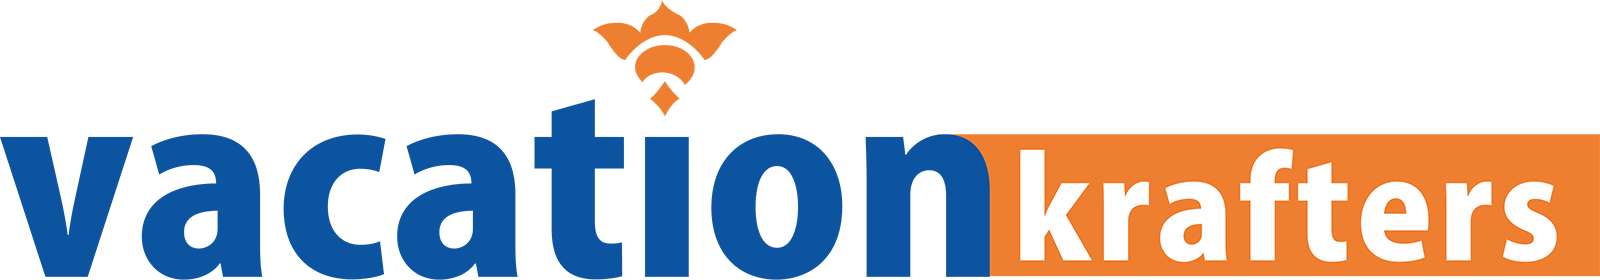 Vacation Krafters Brand Logo